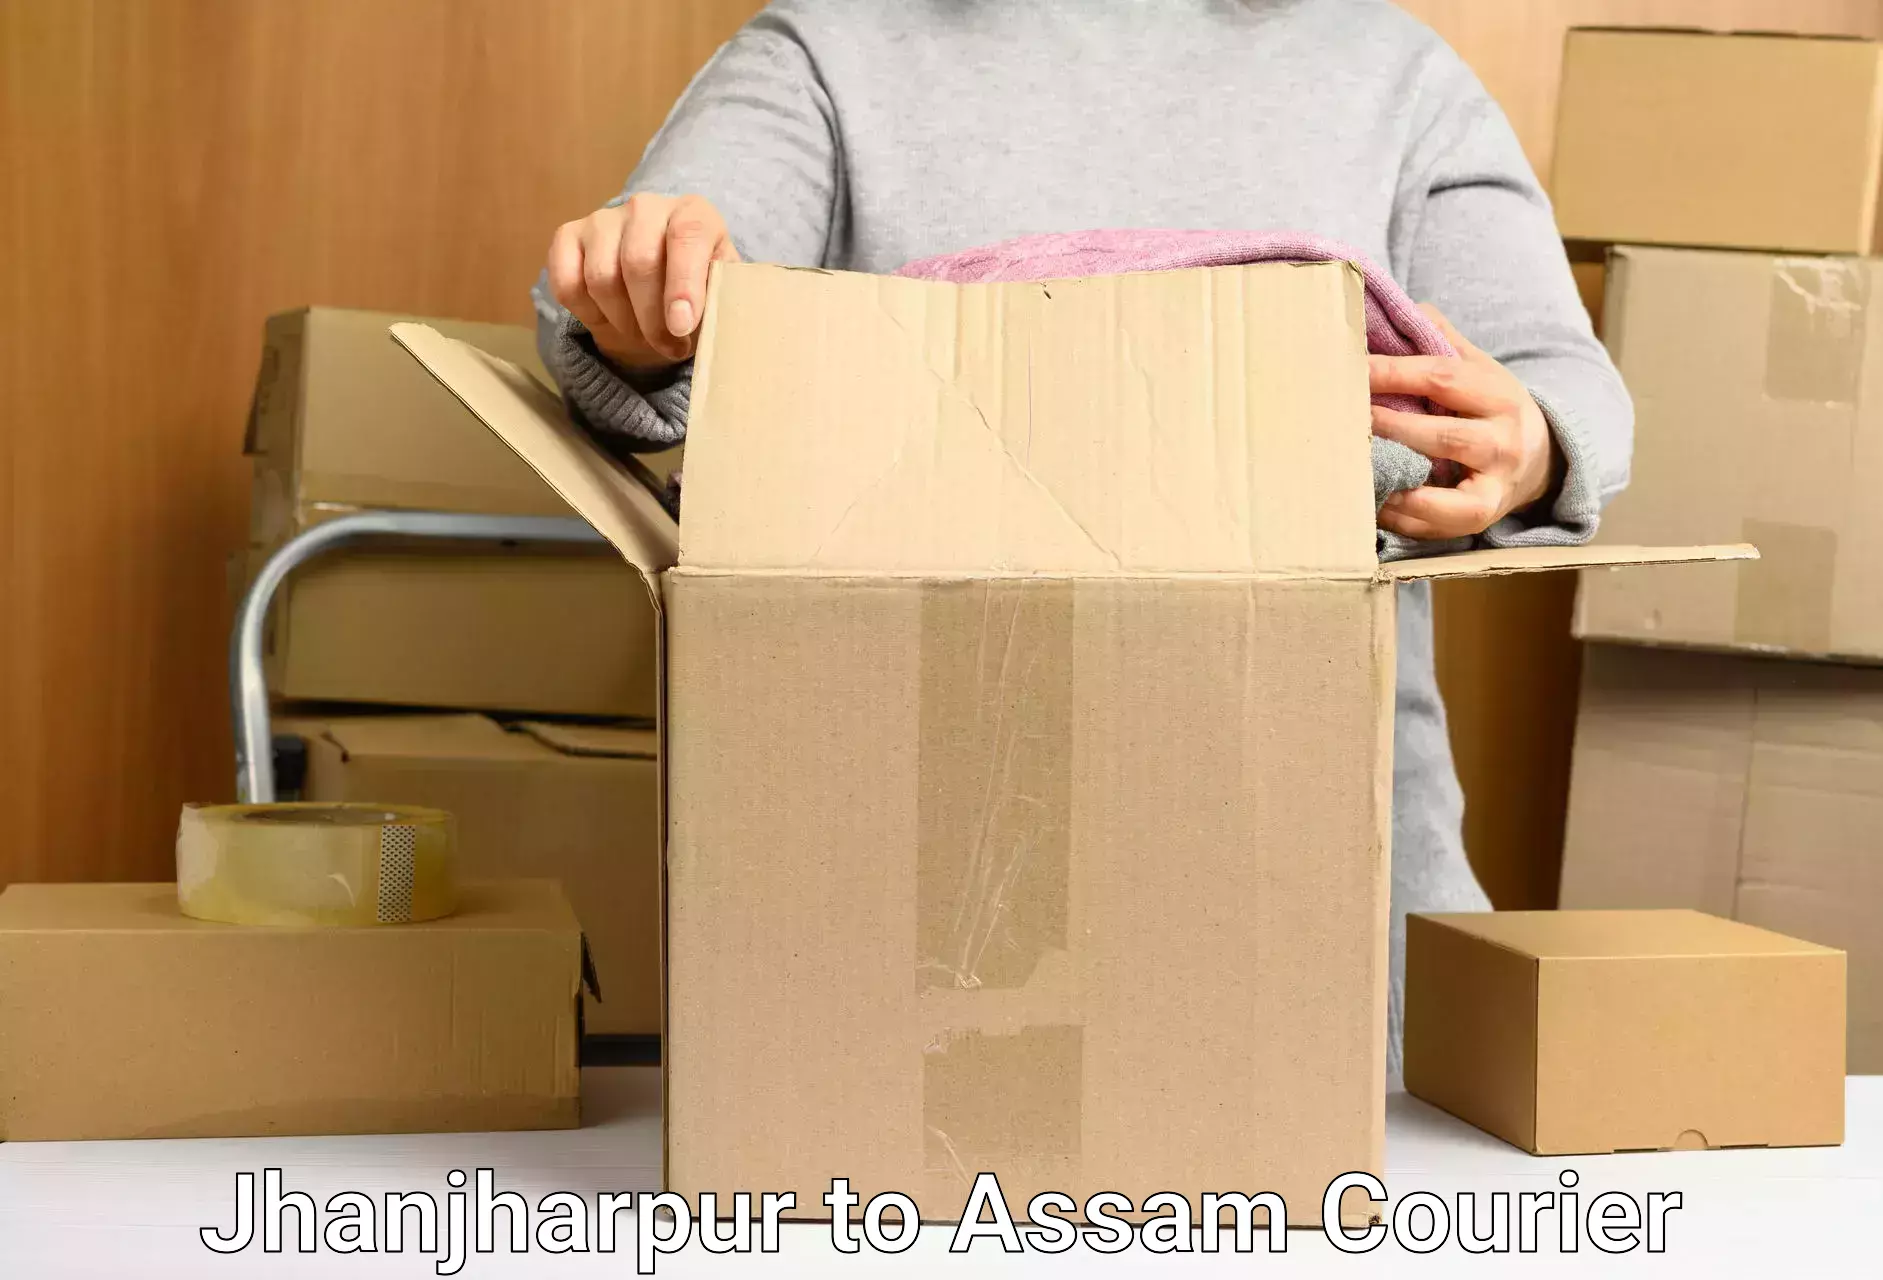 Easy return solutions Jhanjharpur to Lala Assam